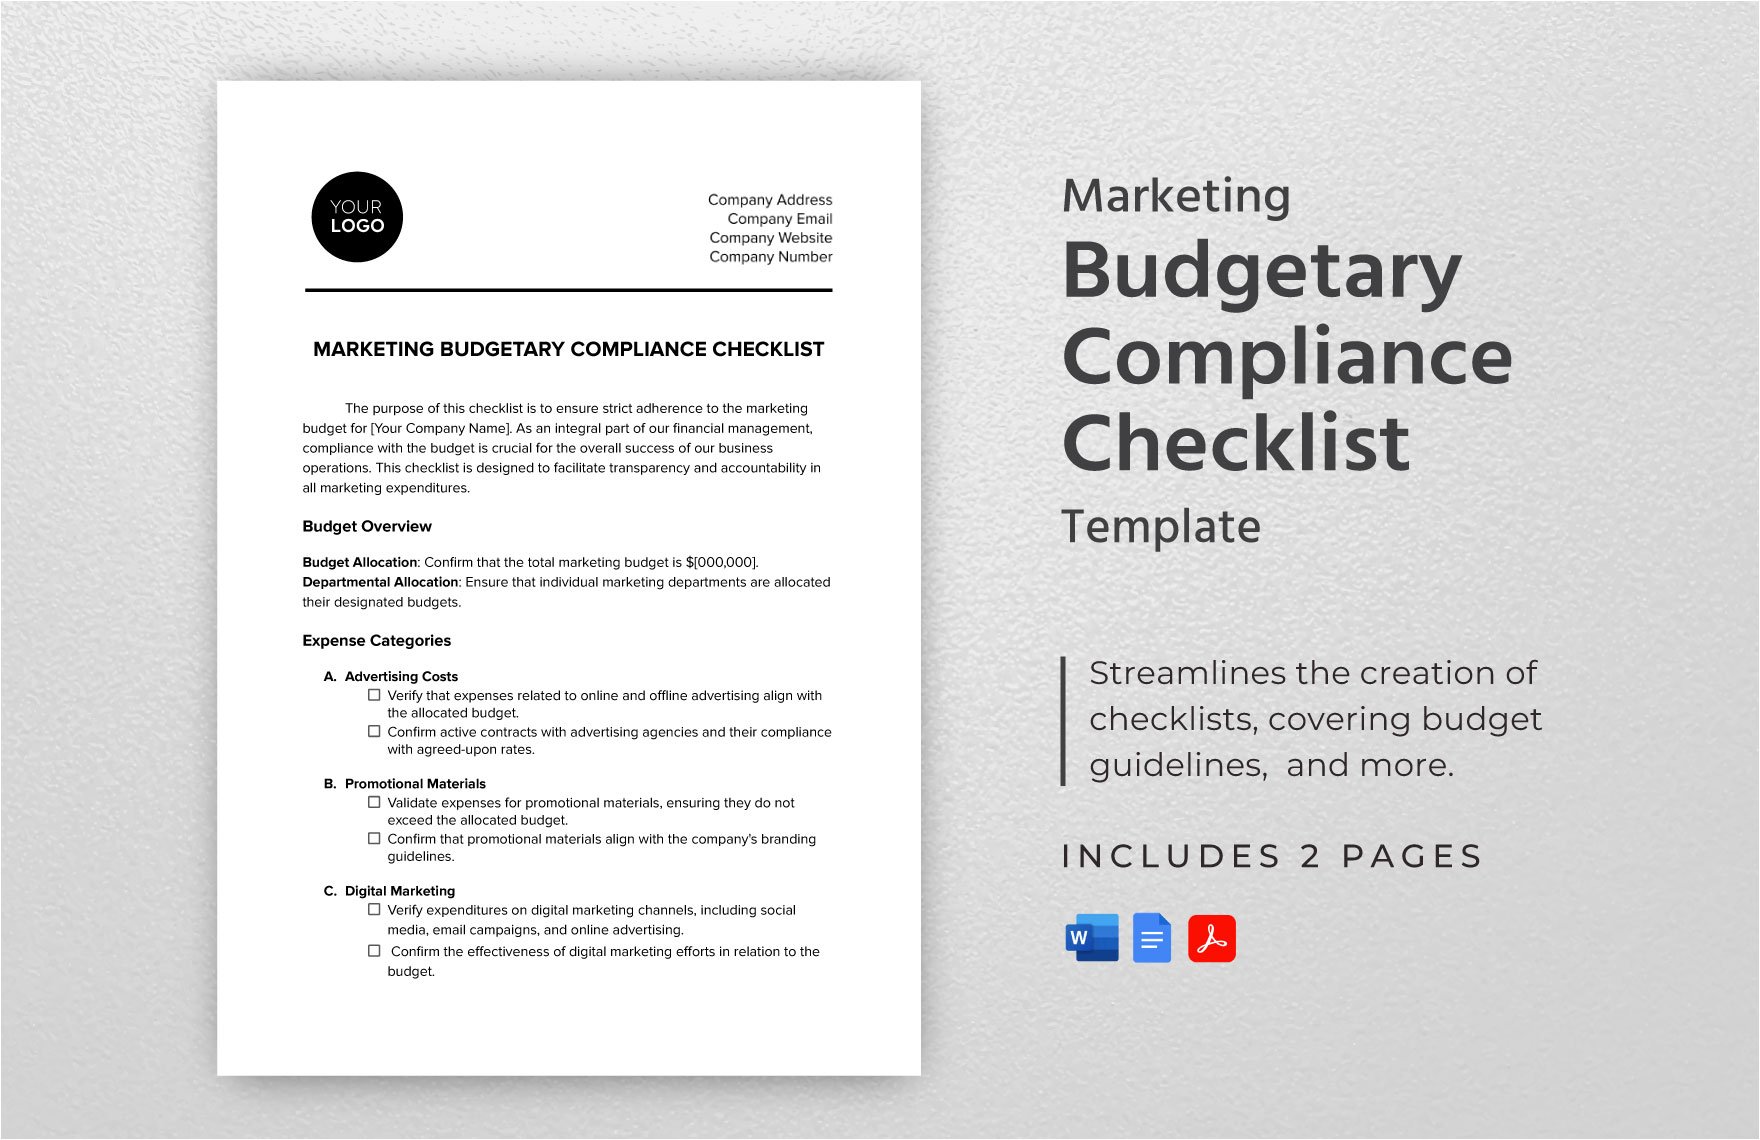 Marketing Budgetary Compliance Checklist Template